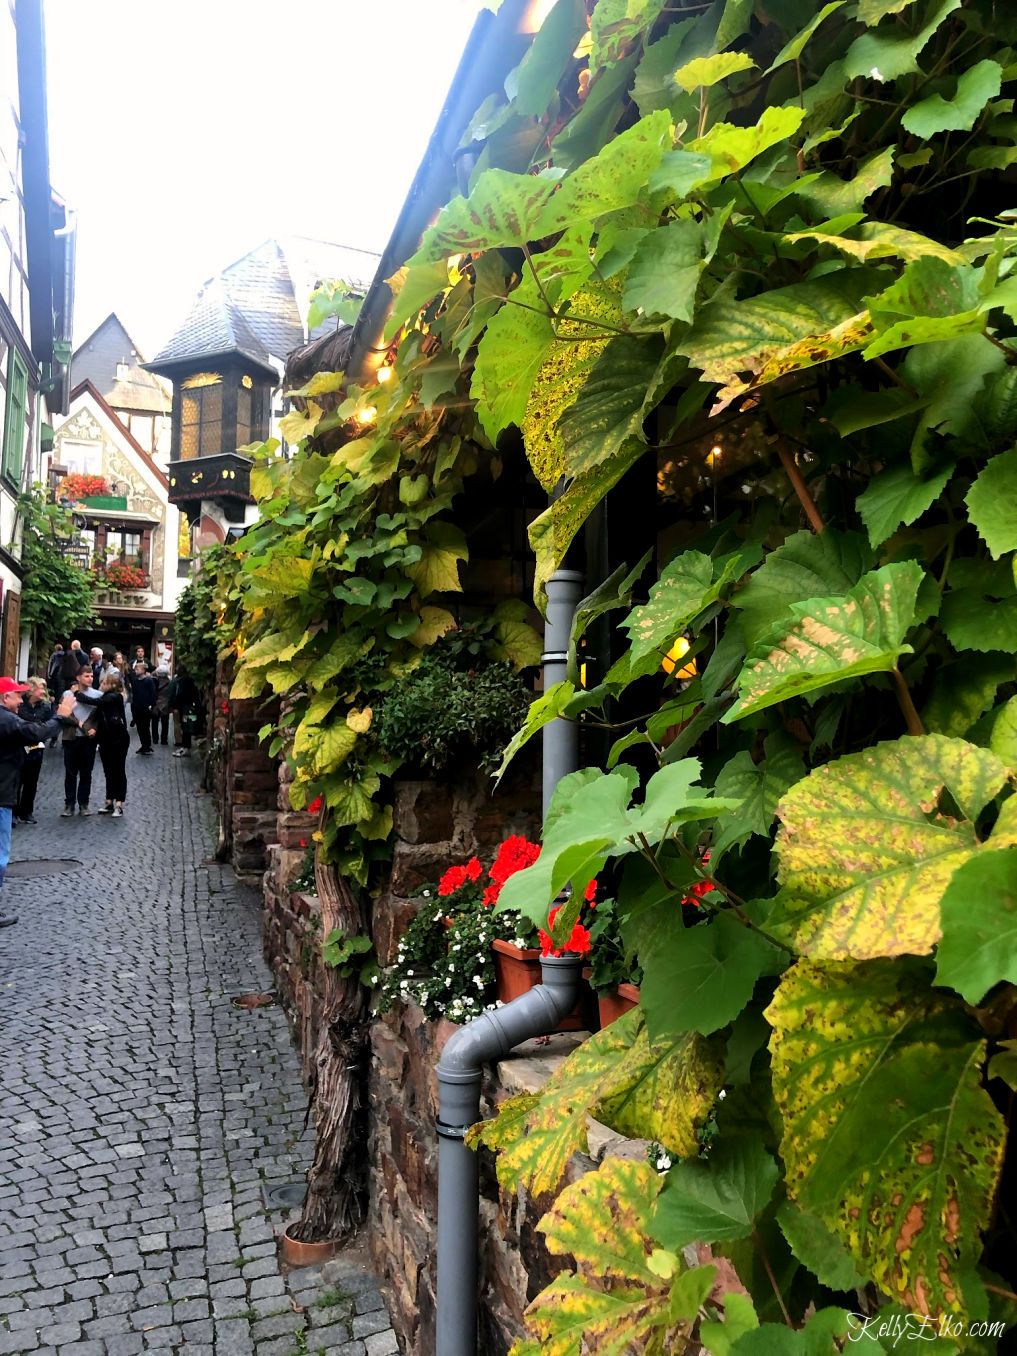 The charming Rhine river village of Rudesheim Germany has beautiful vine covered buildings kellyelko.com #Rudesheim #germany #rivercruise #rhineriver #travel #travelblog #travelblogger #vacation #europe #europevacation 